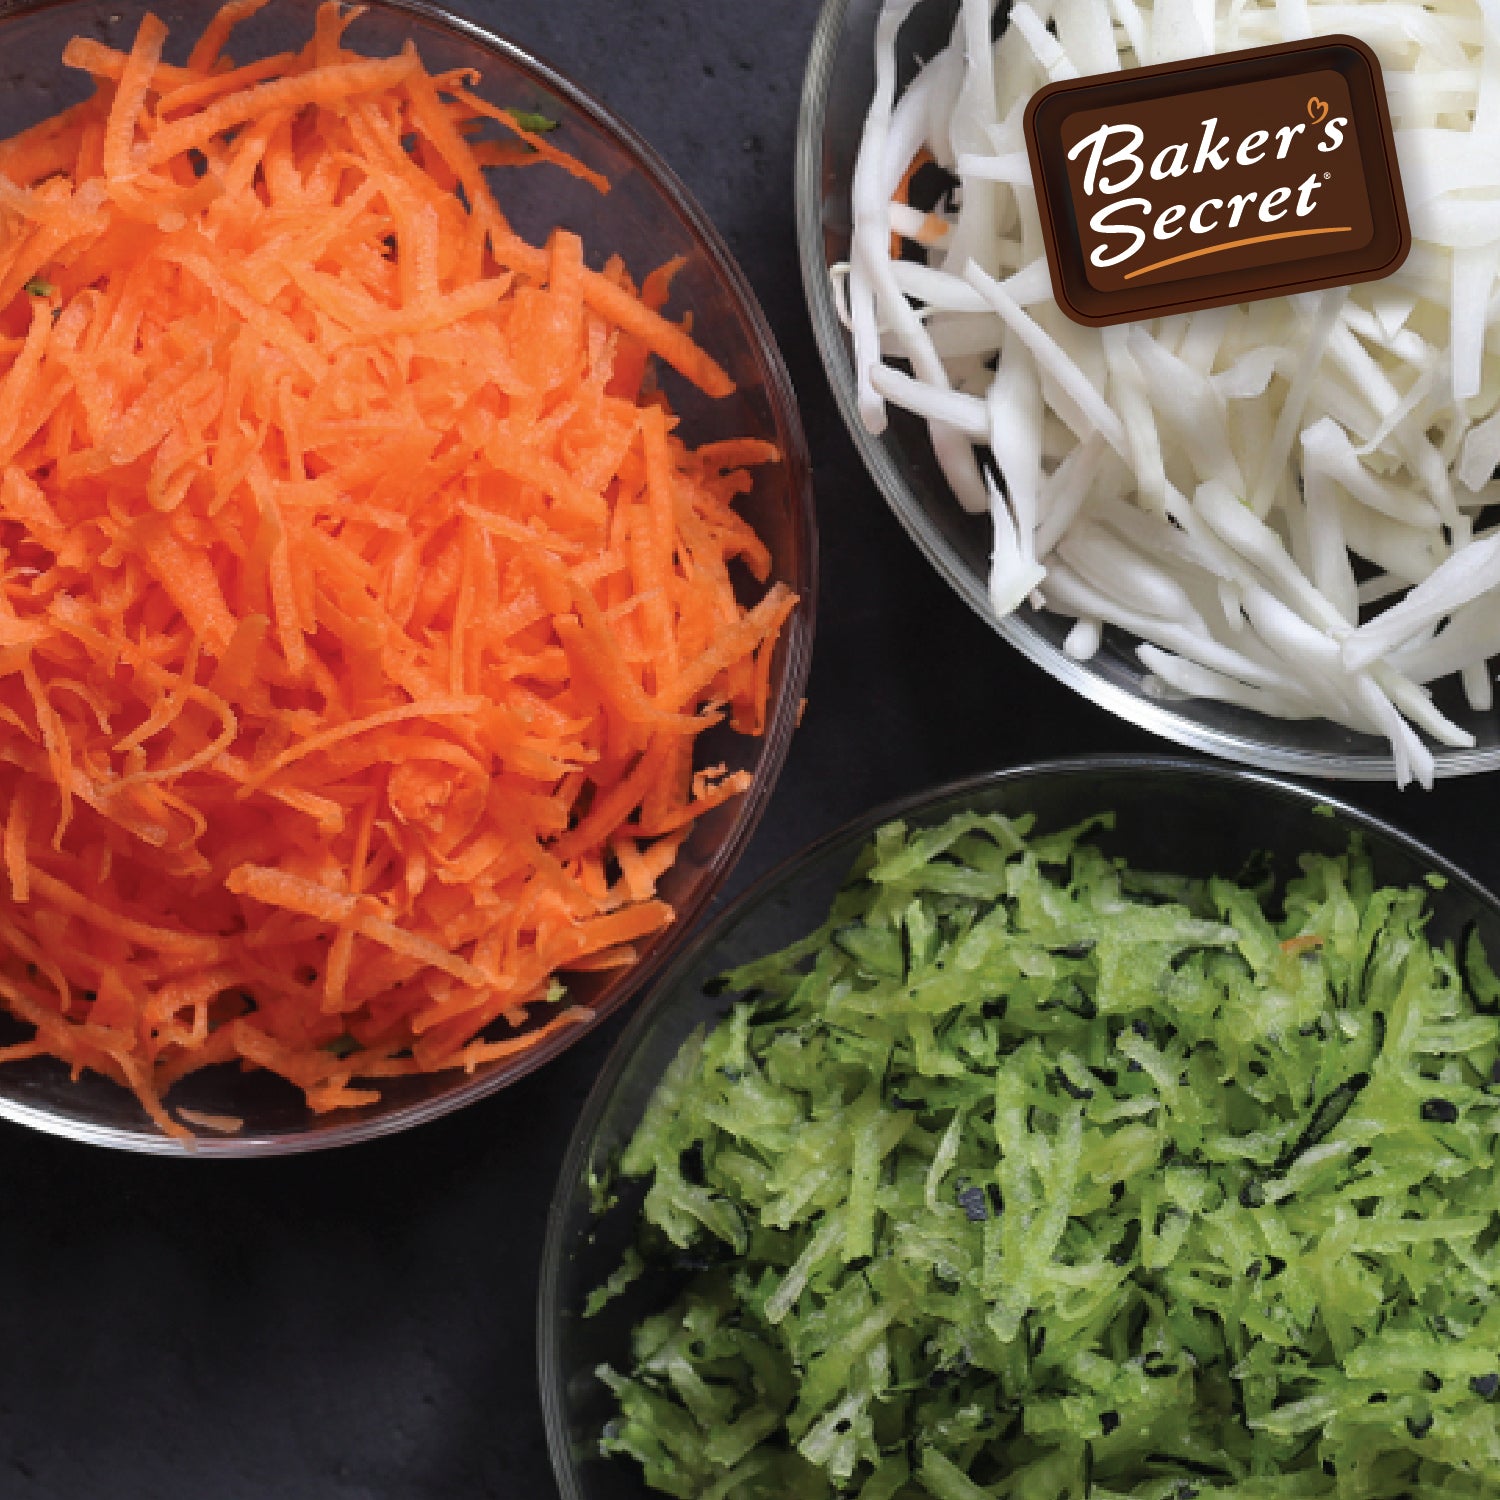 Y Shape Peelers  Cookware Accessories - Baker's Secret